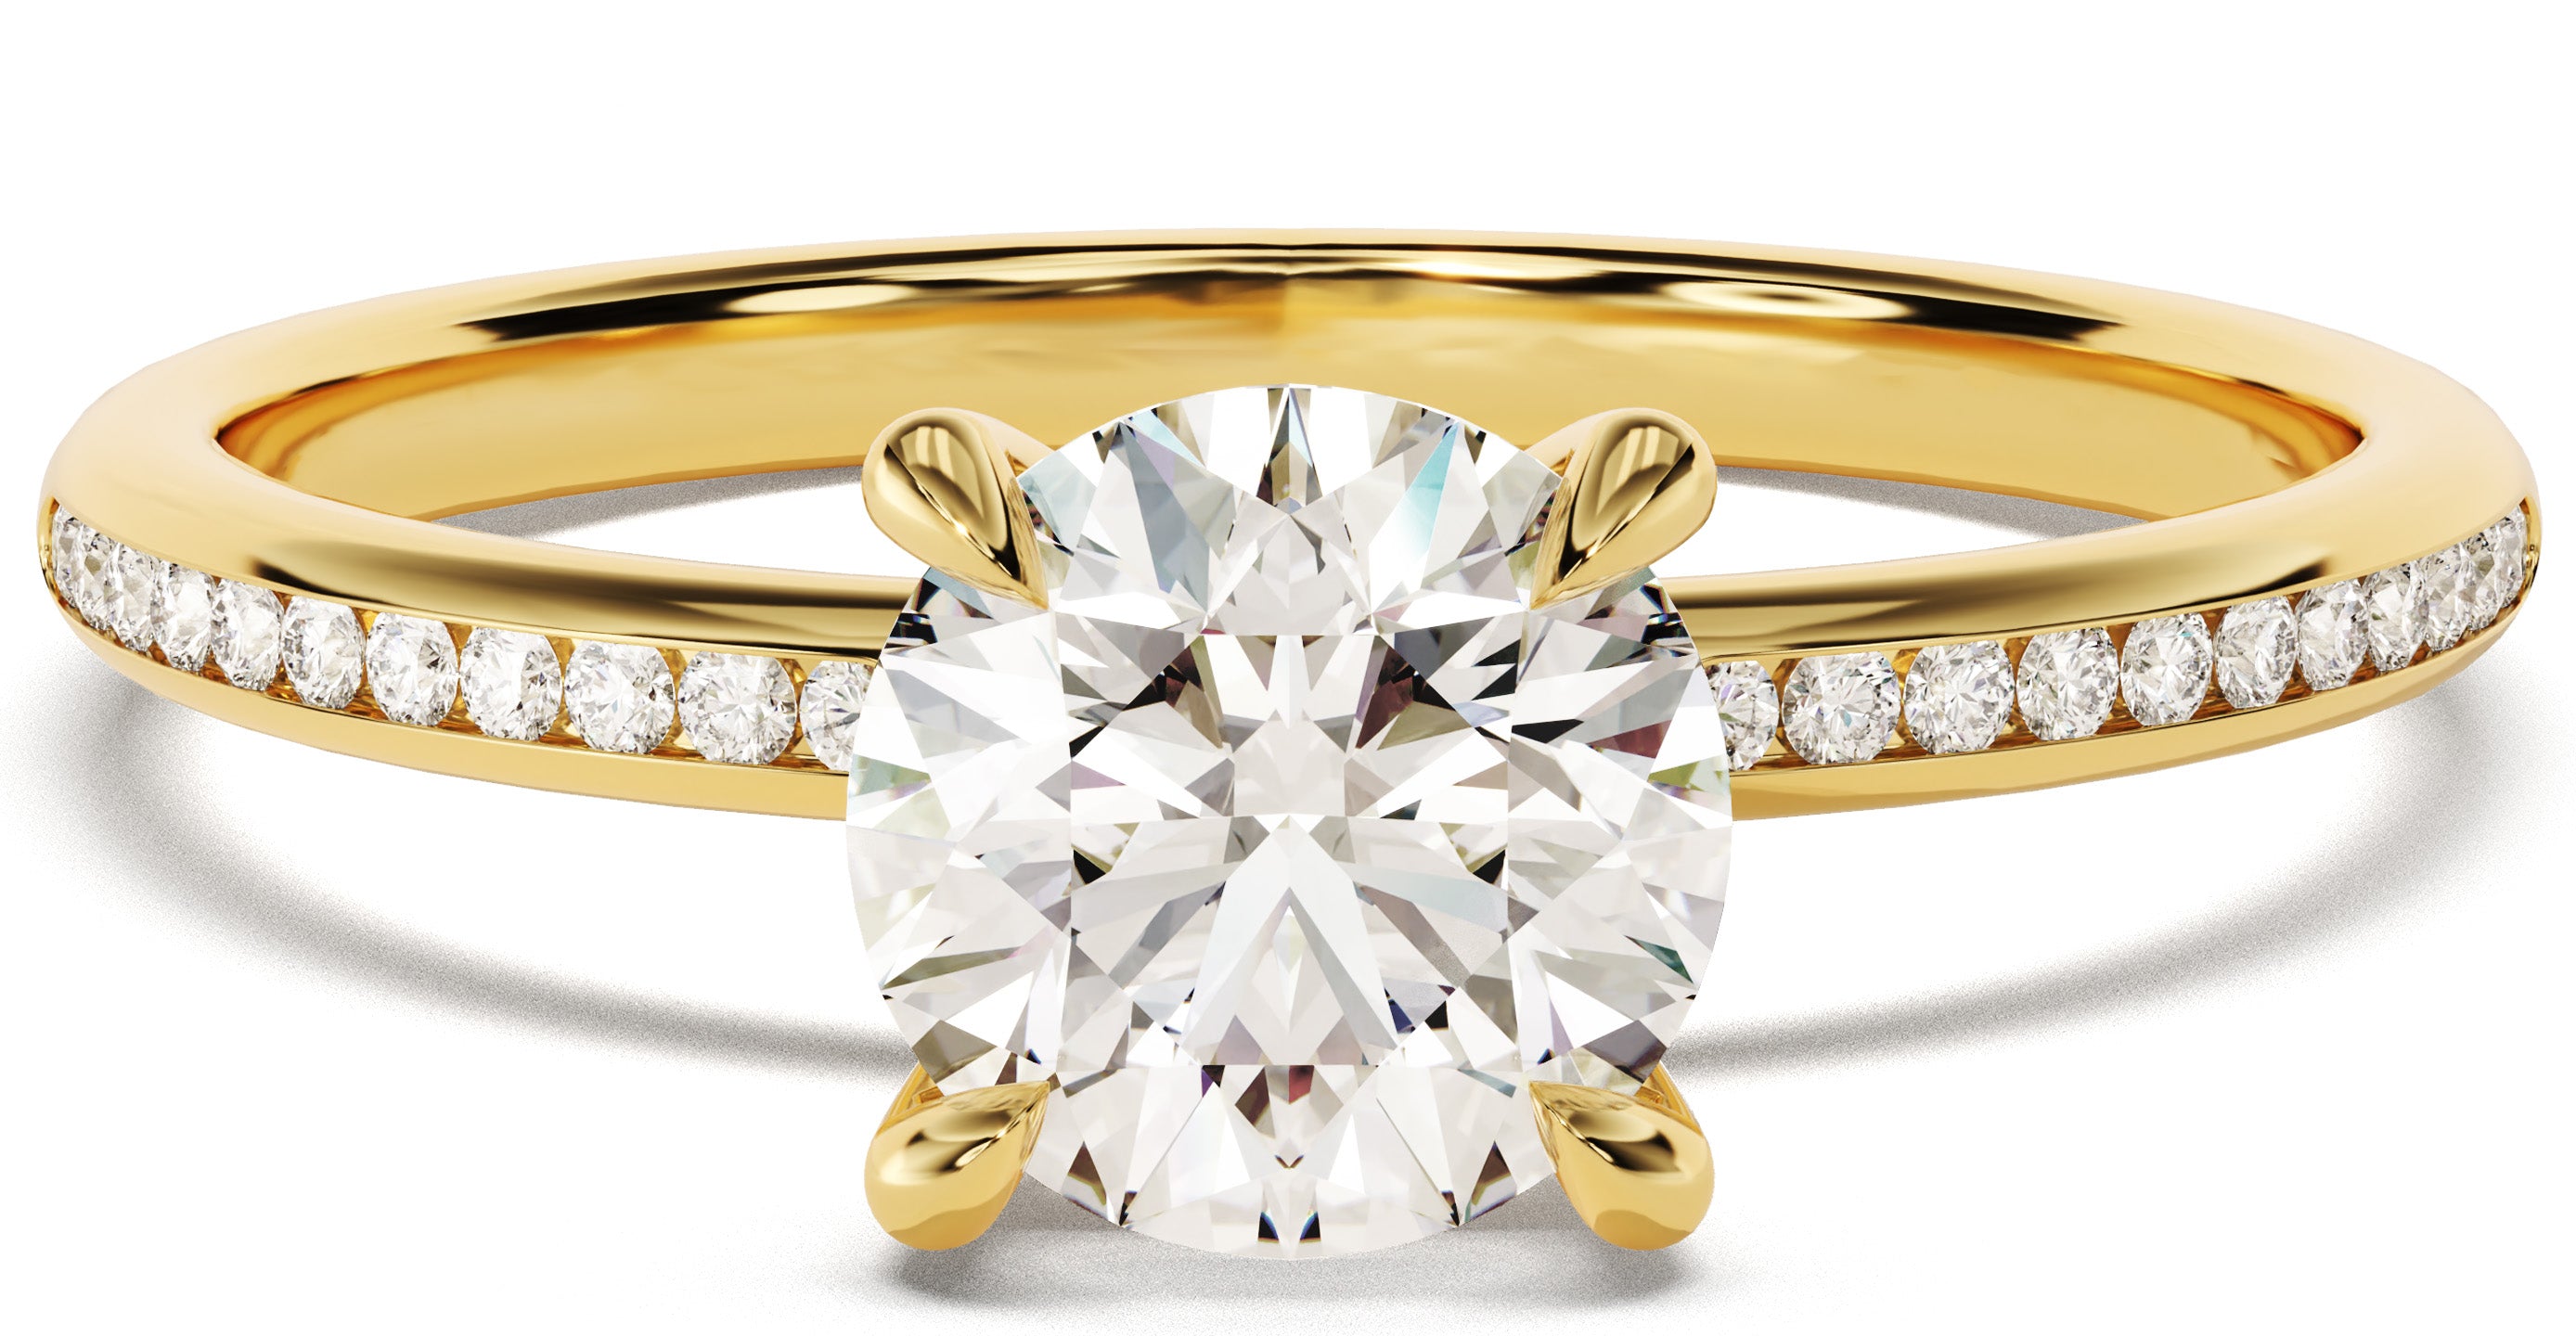 fine elegant jewelry, channel setting 14k, 18k solid gold moissanite engagement ring, custom made, options of white gold, rose gold and platinum, custom rings